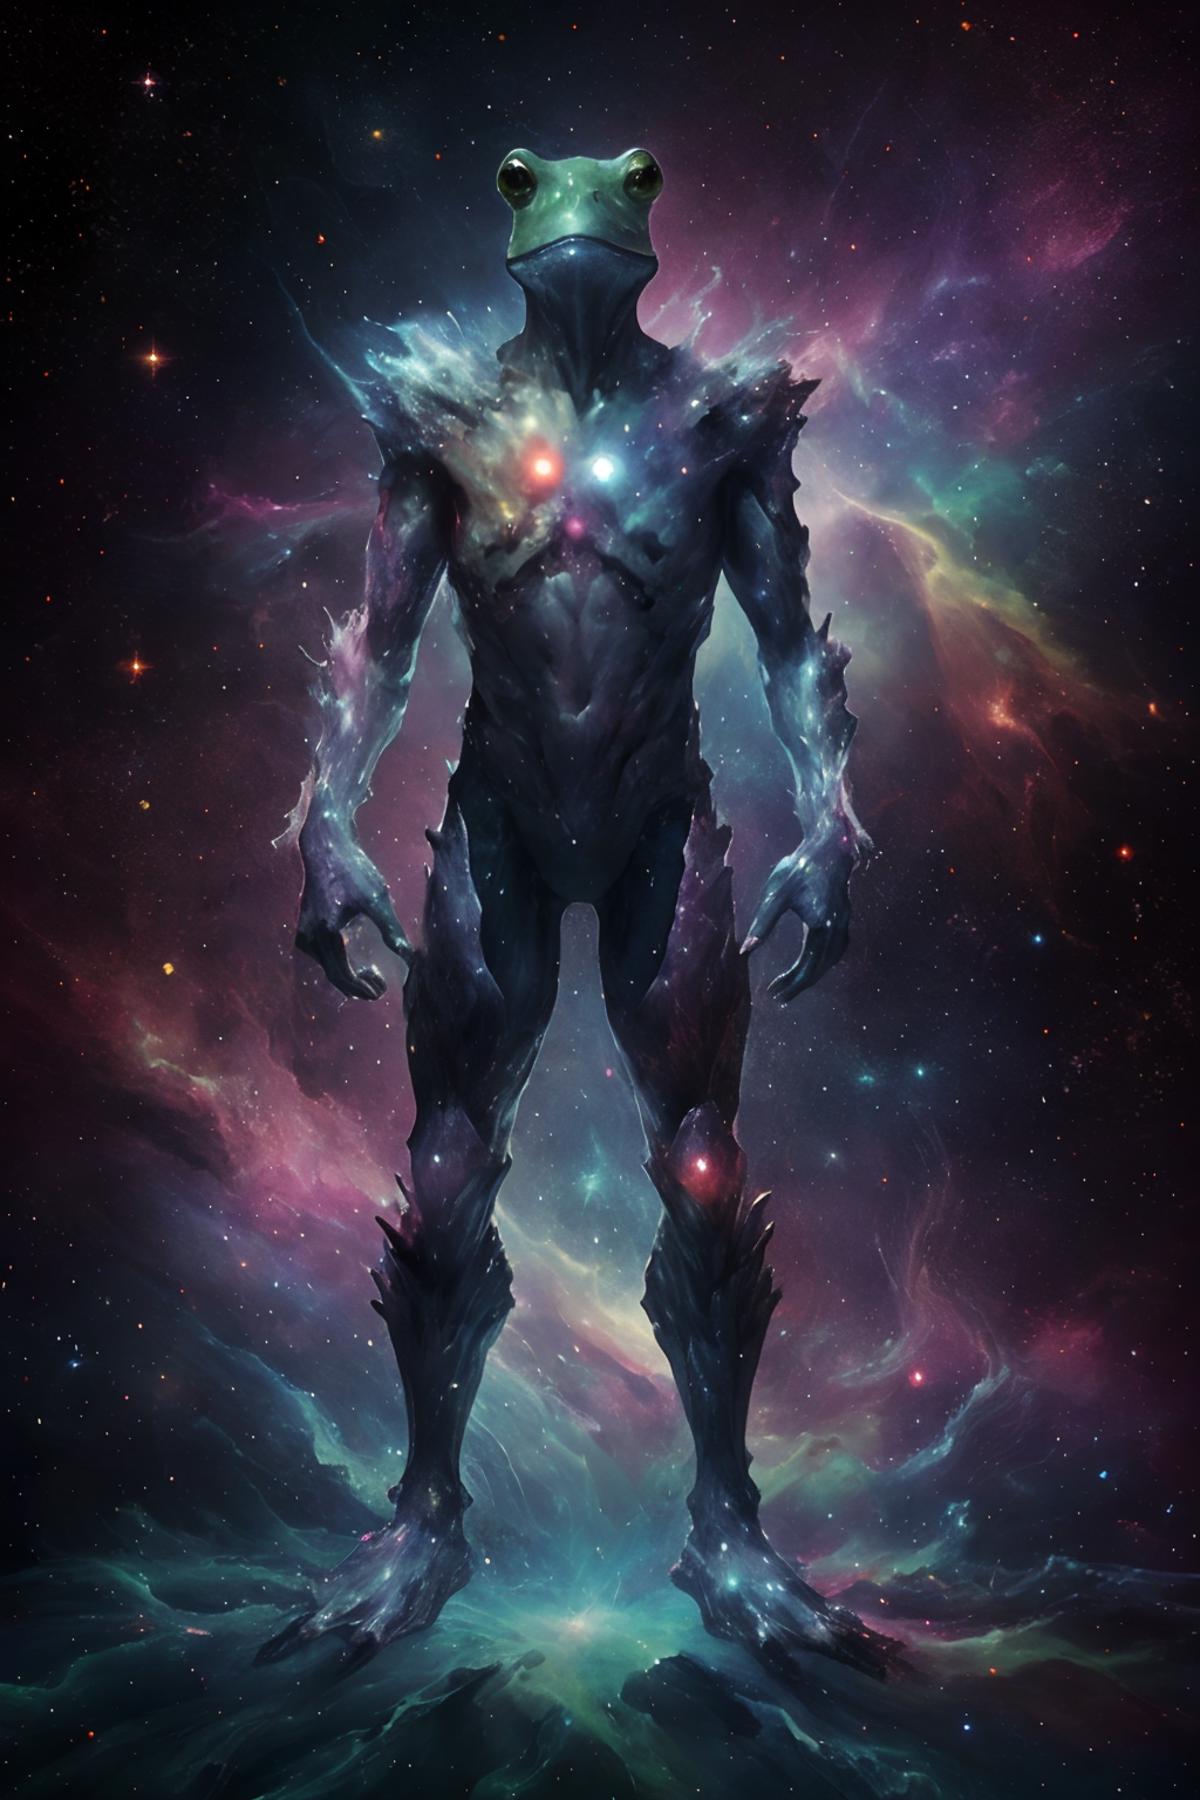 Cosmic Nebula Style SDXL + SD1.5 image by martius72